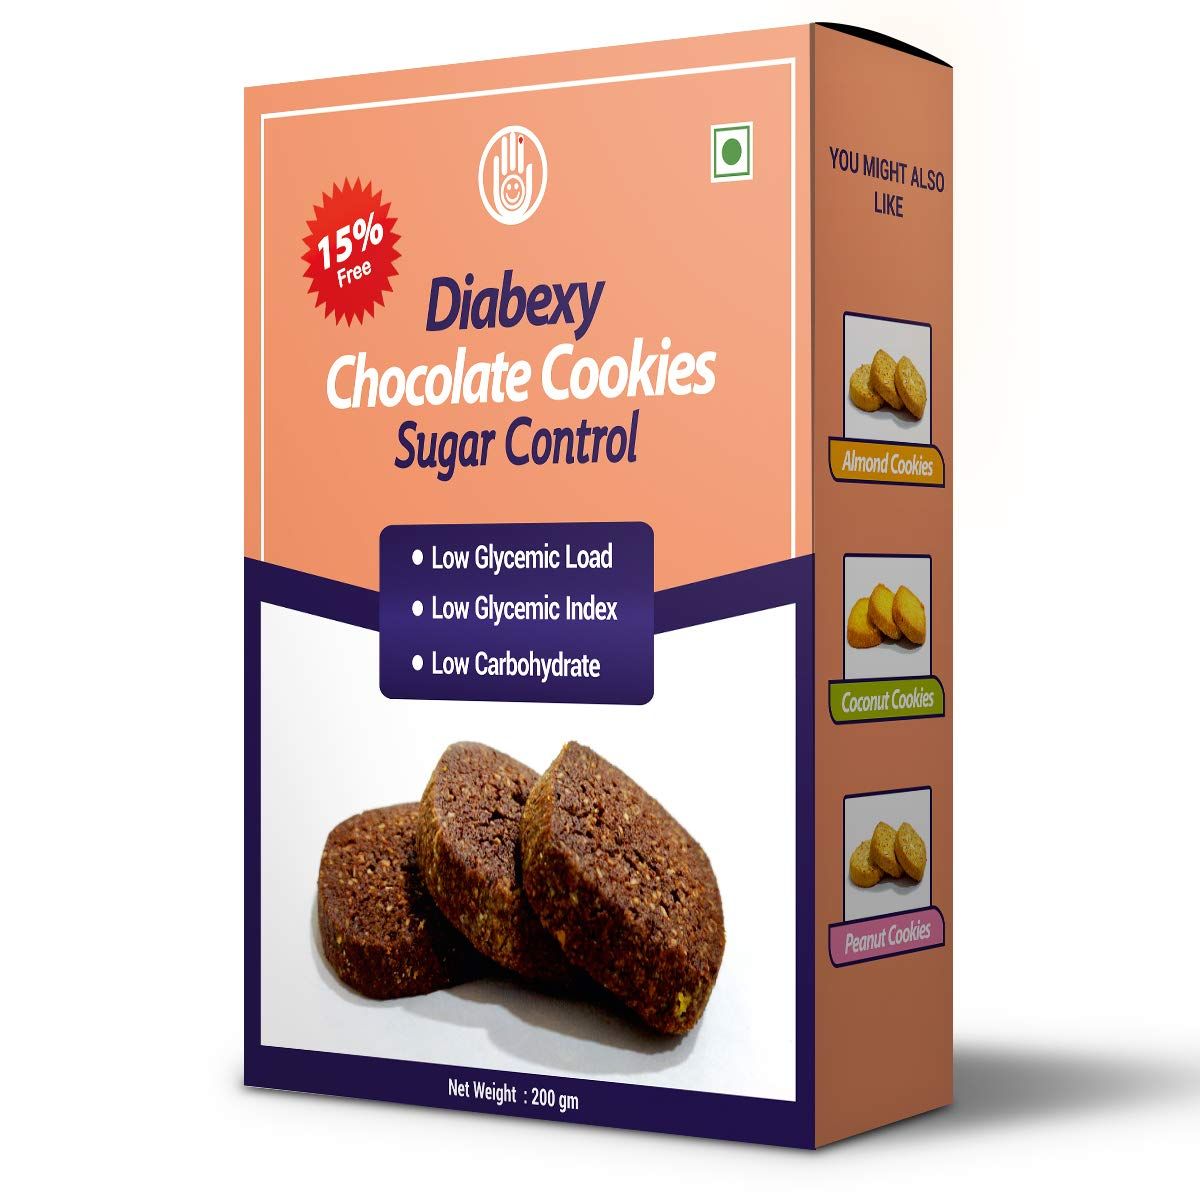 Diabexy Chocolate Cookie Sugar Control for Diabetes Image